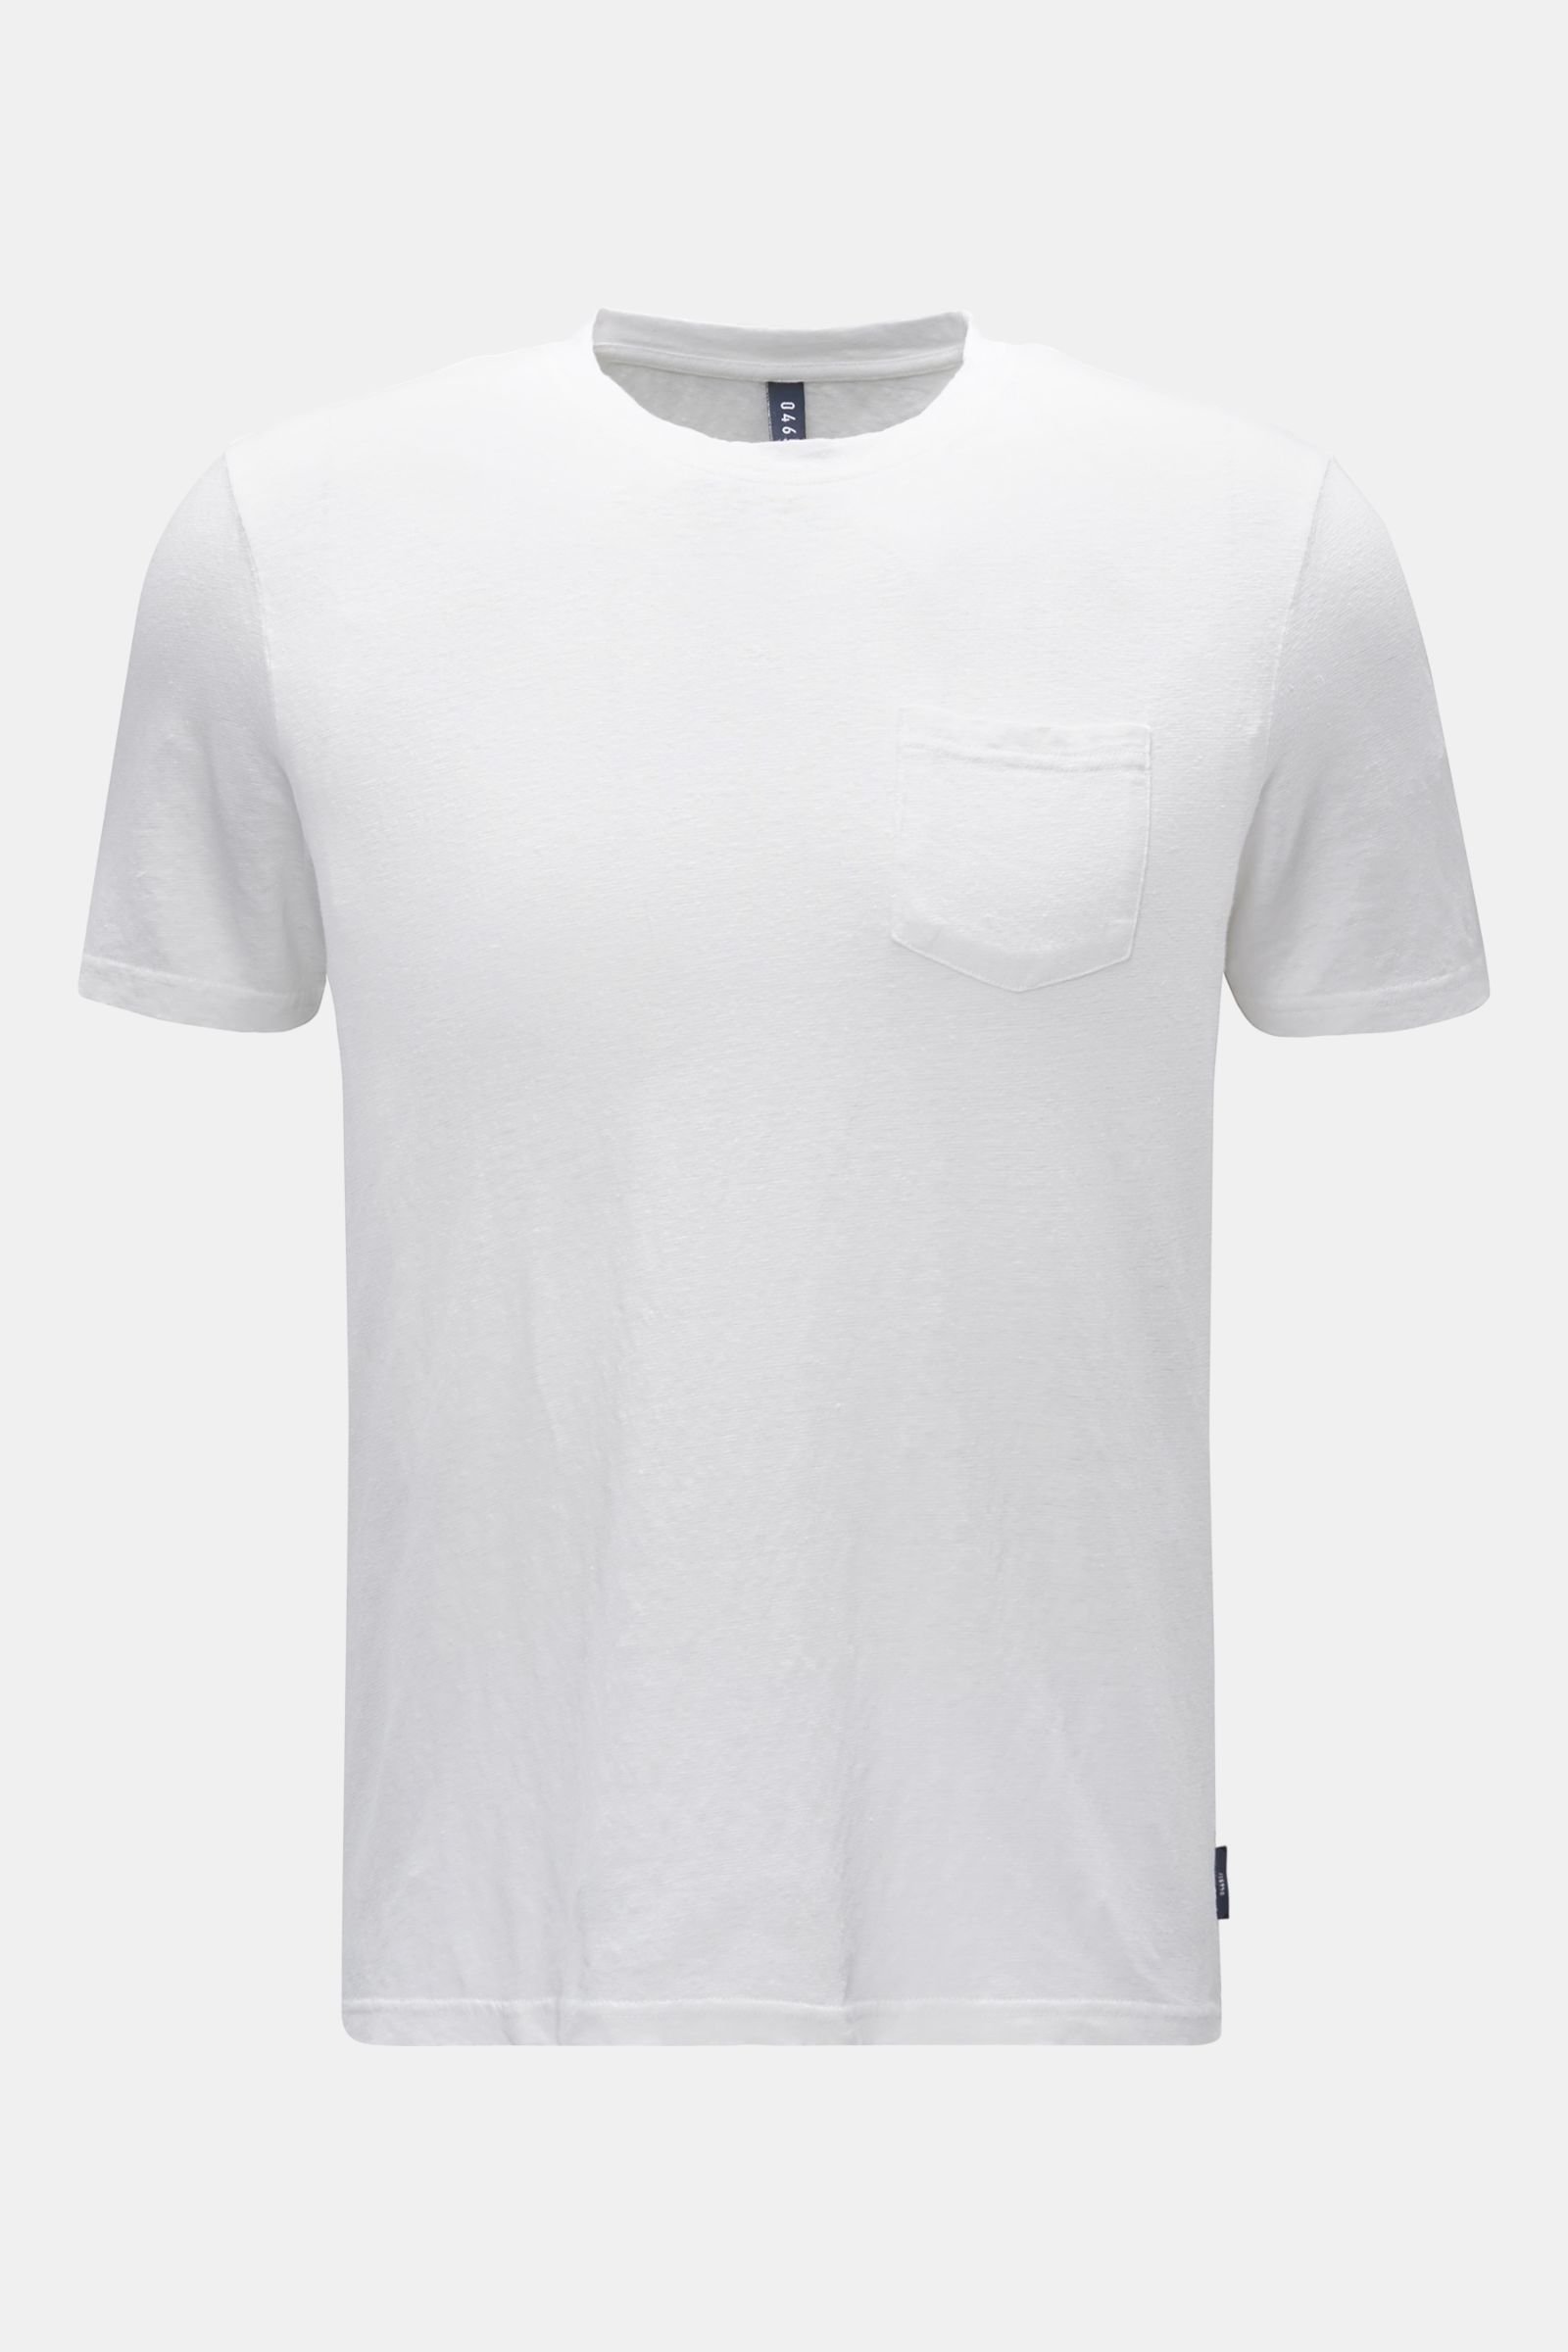 Linen crew neck T-shirt white